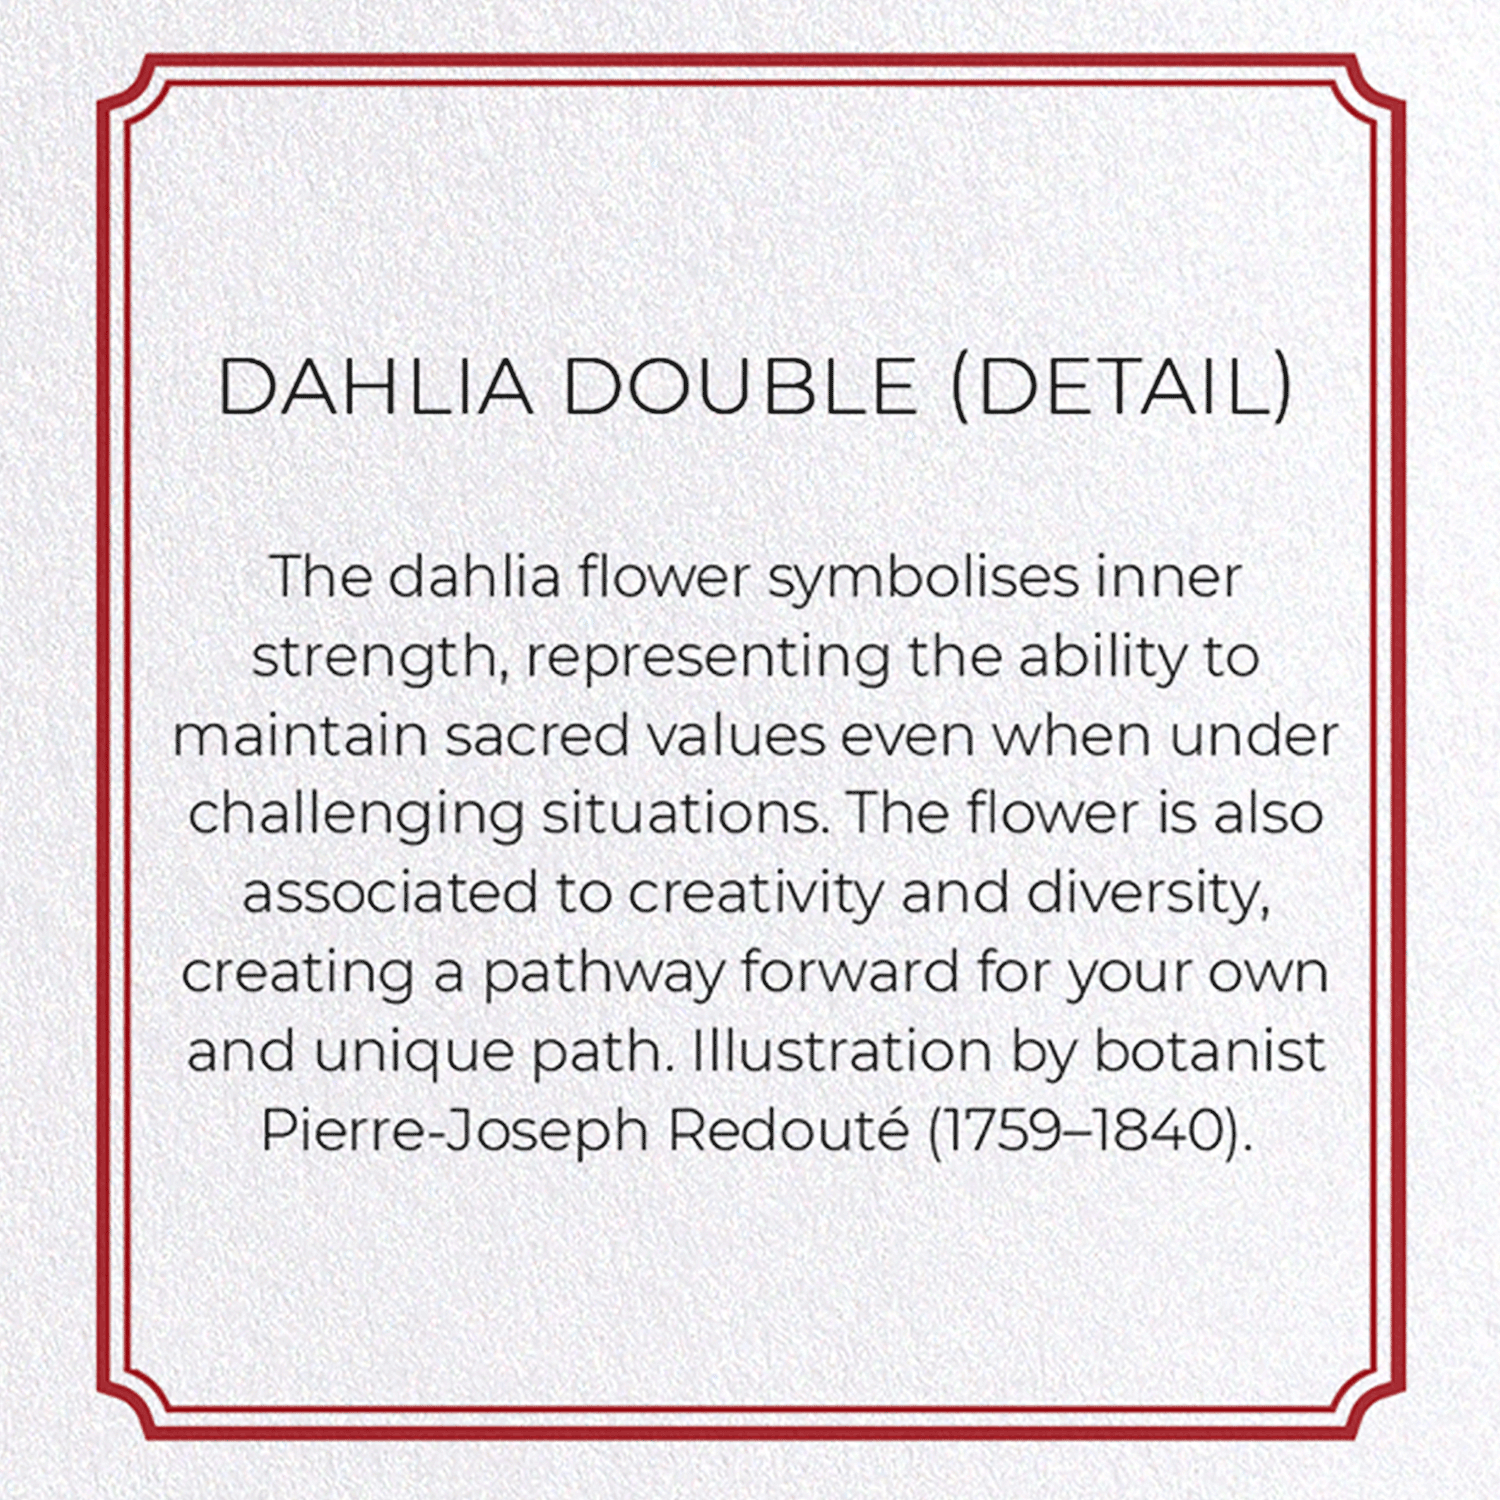 DAHLIA DOUBLE